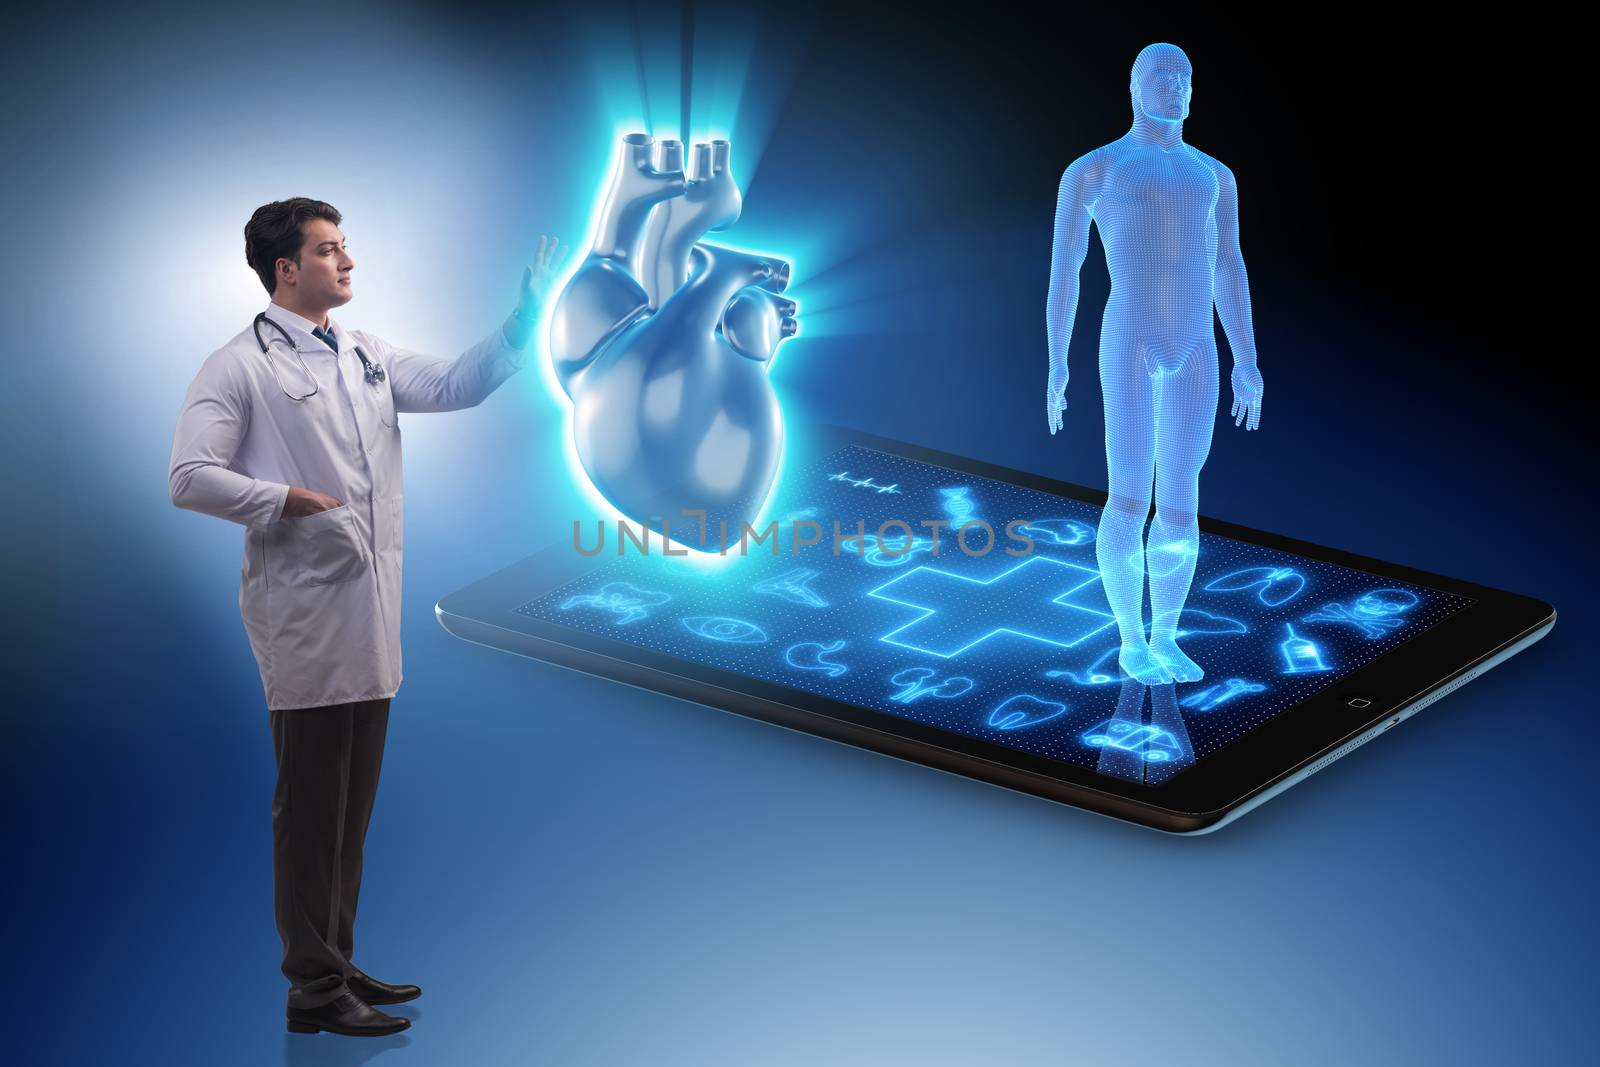 Heart treatment in telemedicine concept by Elnur